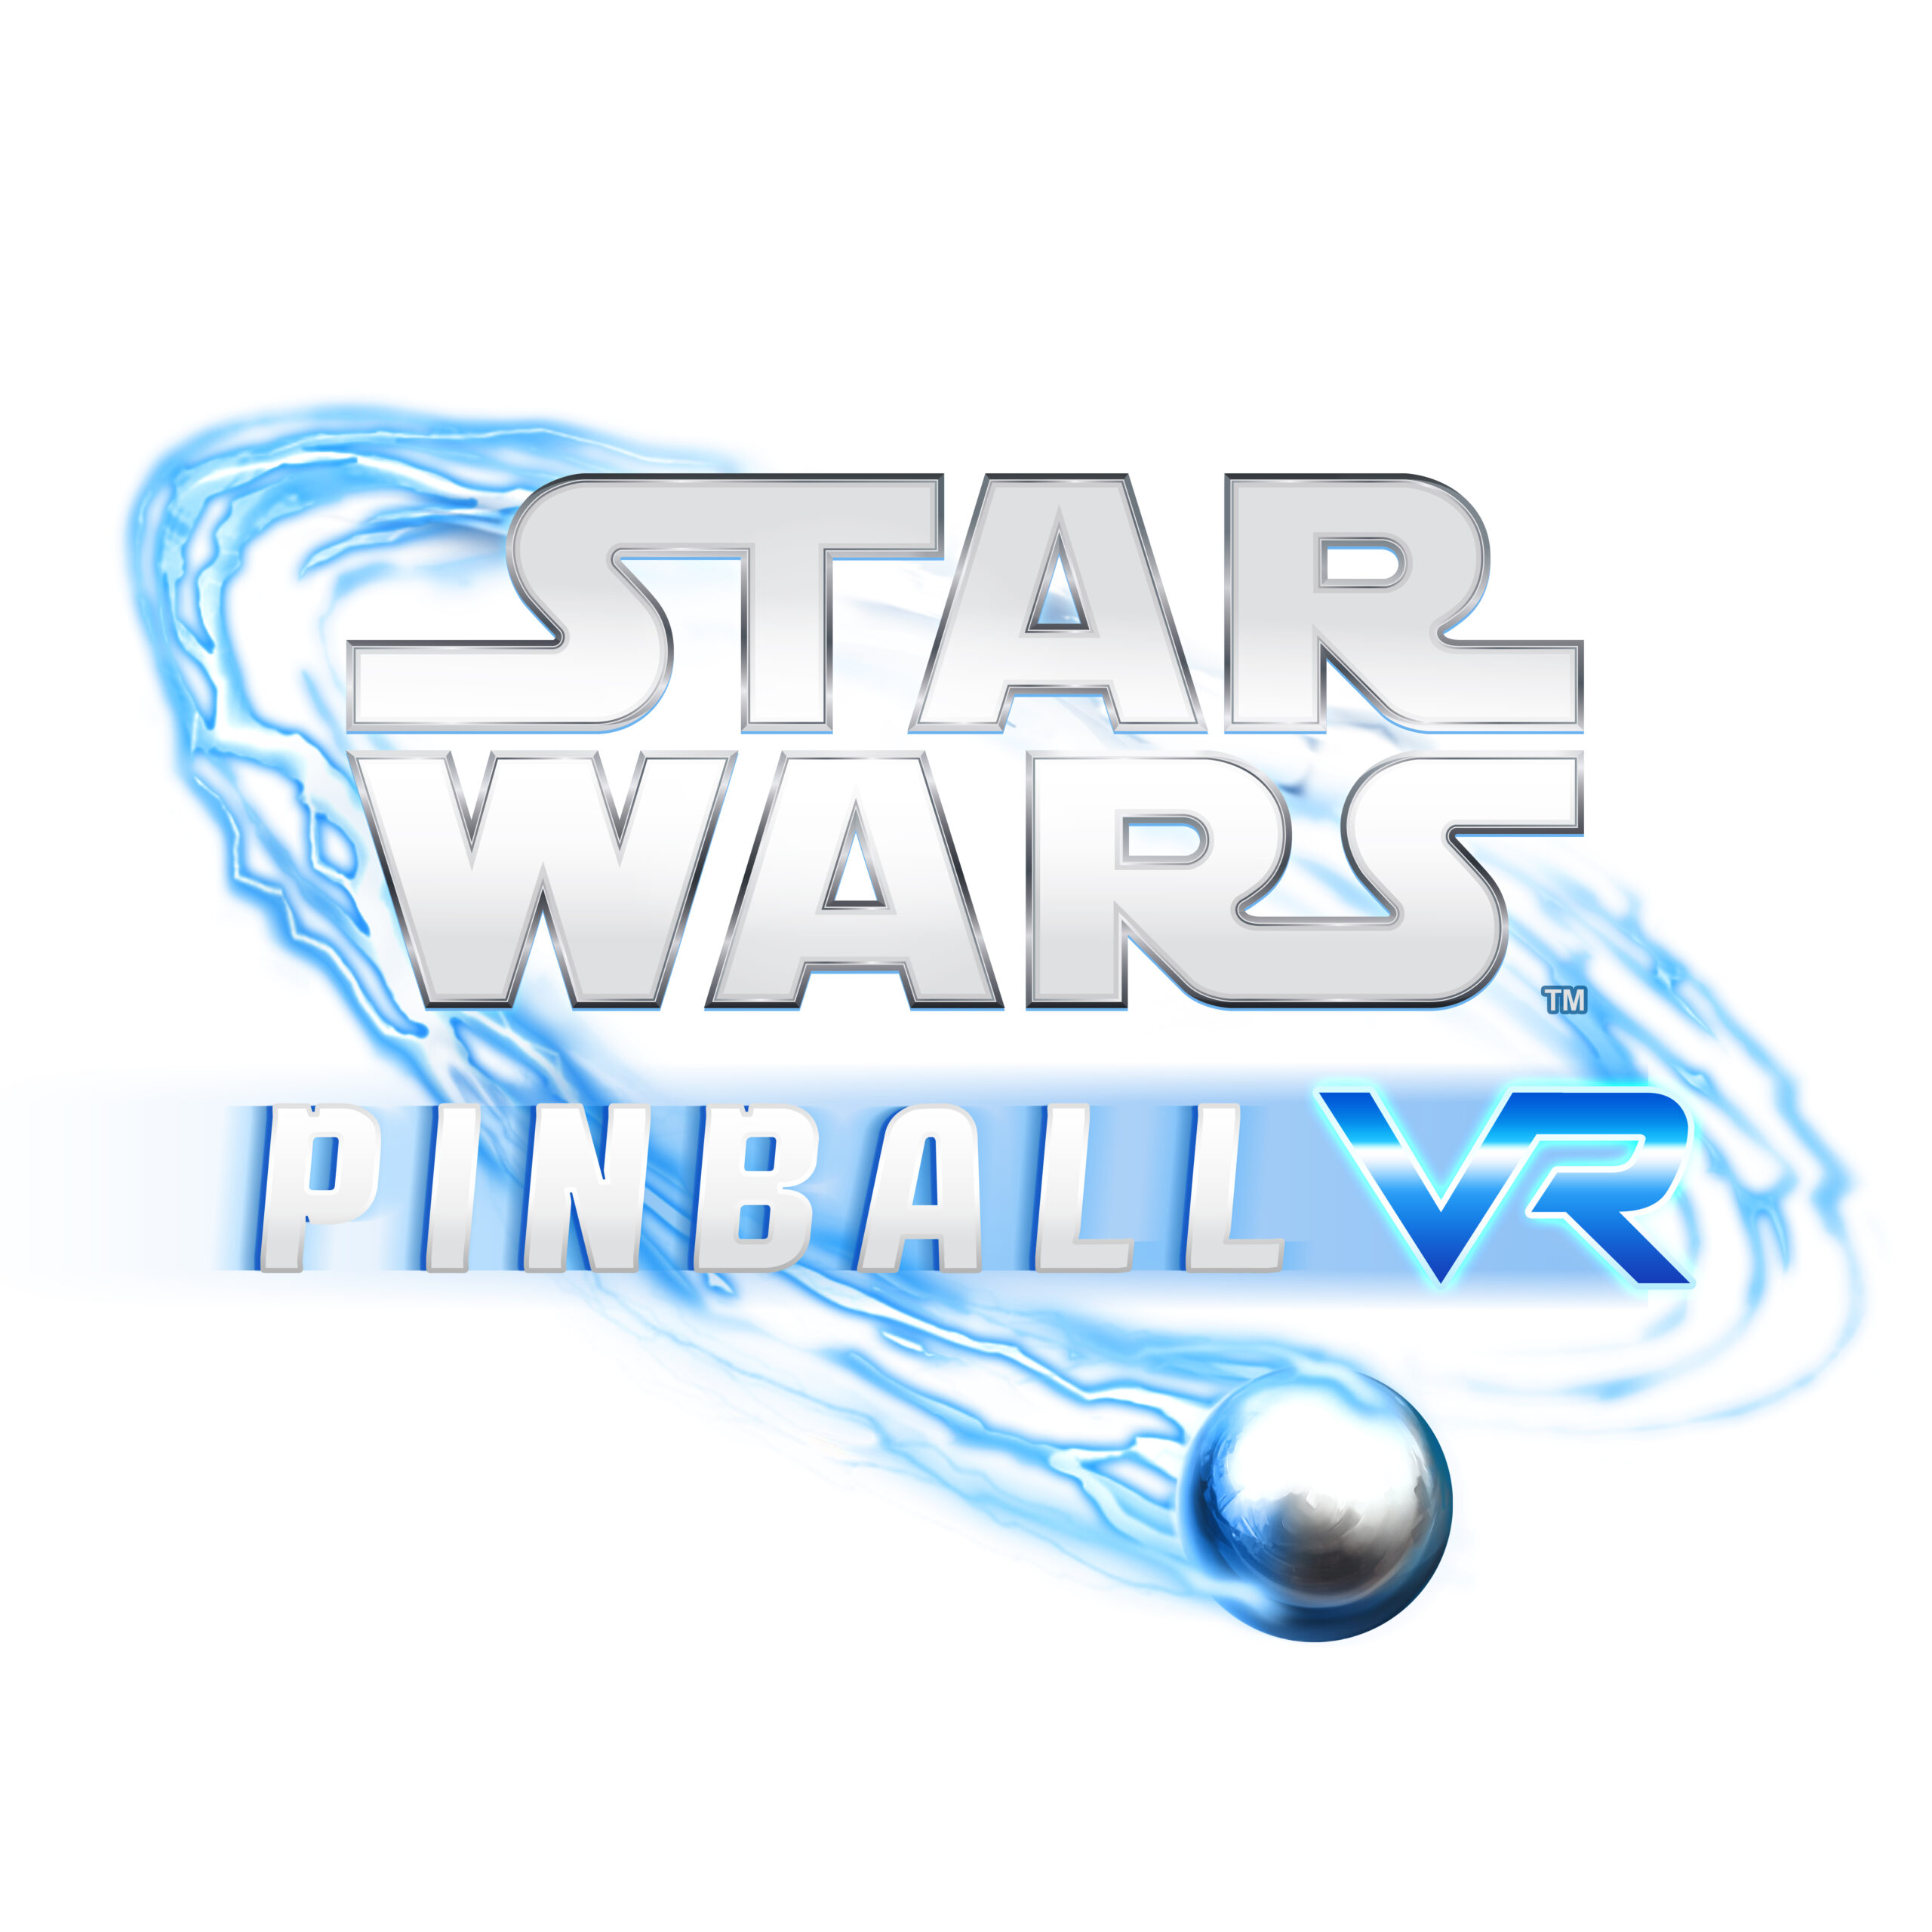 STAR WARS PINBALL VR